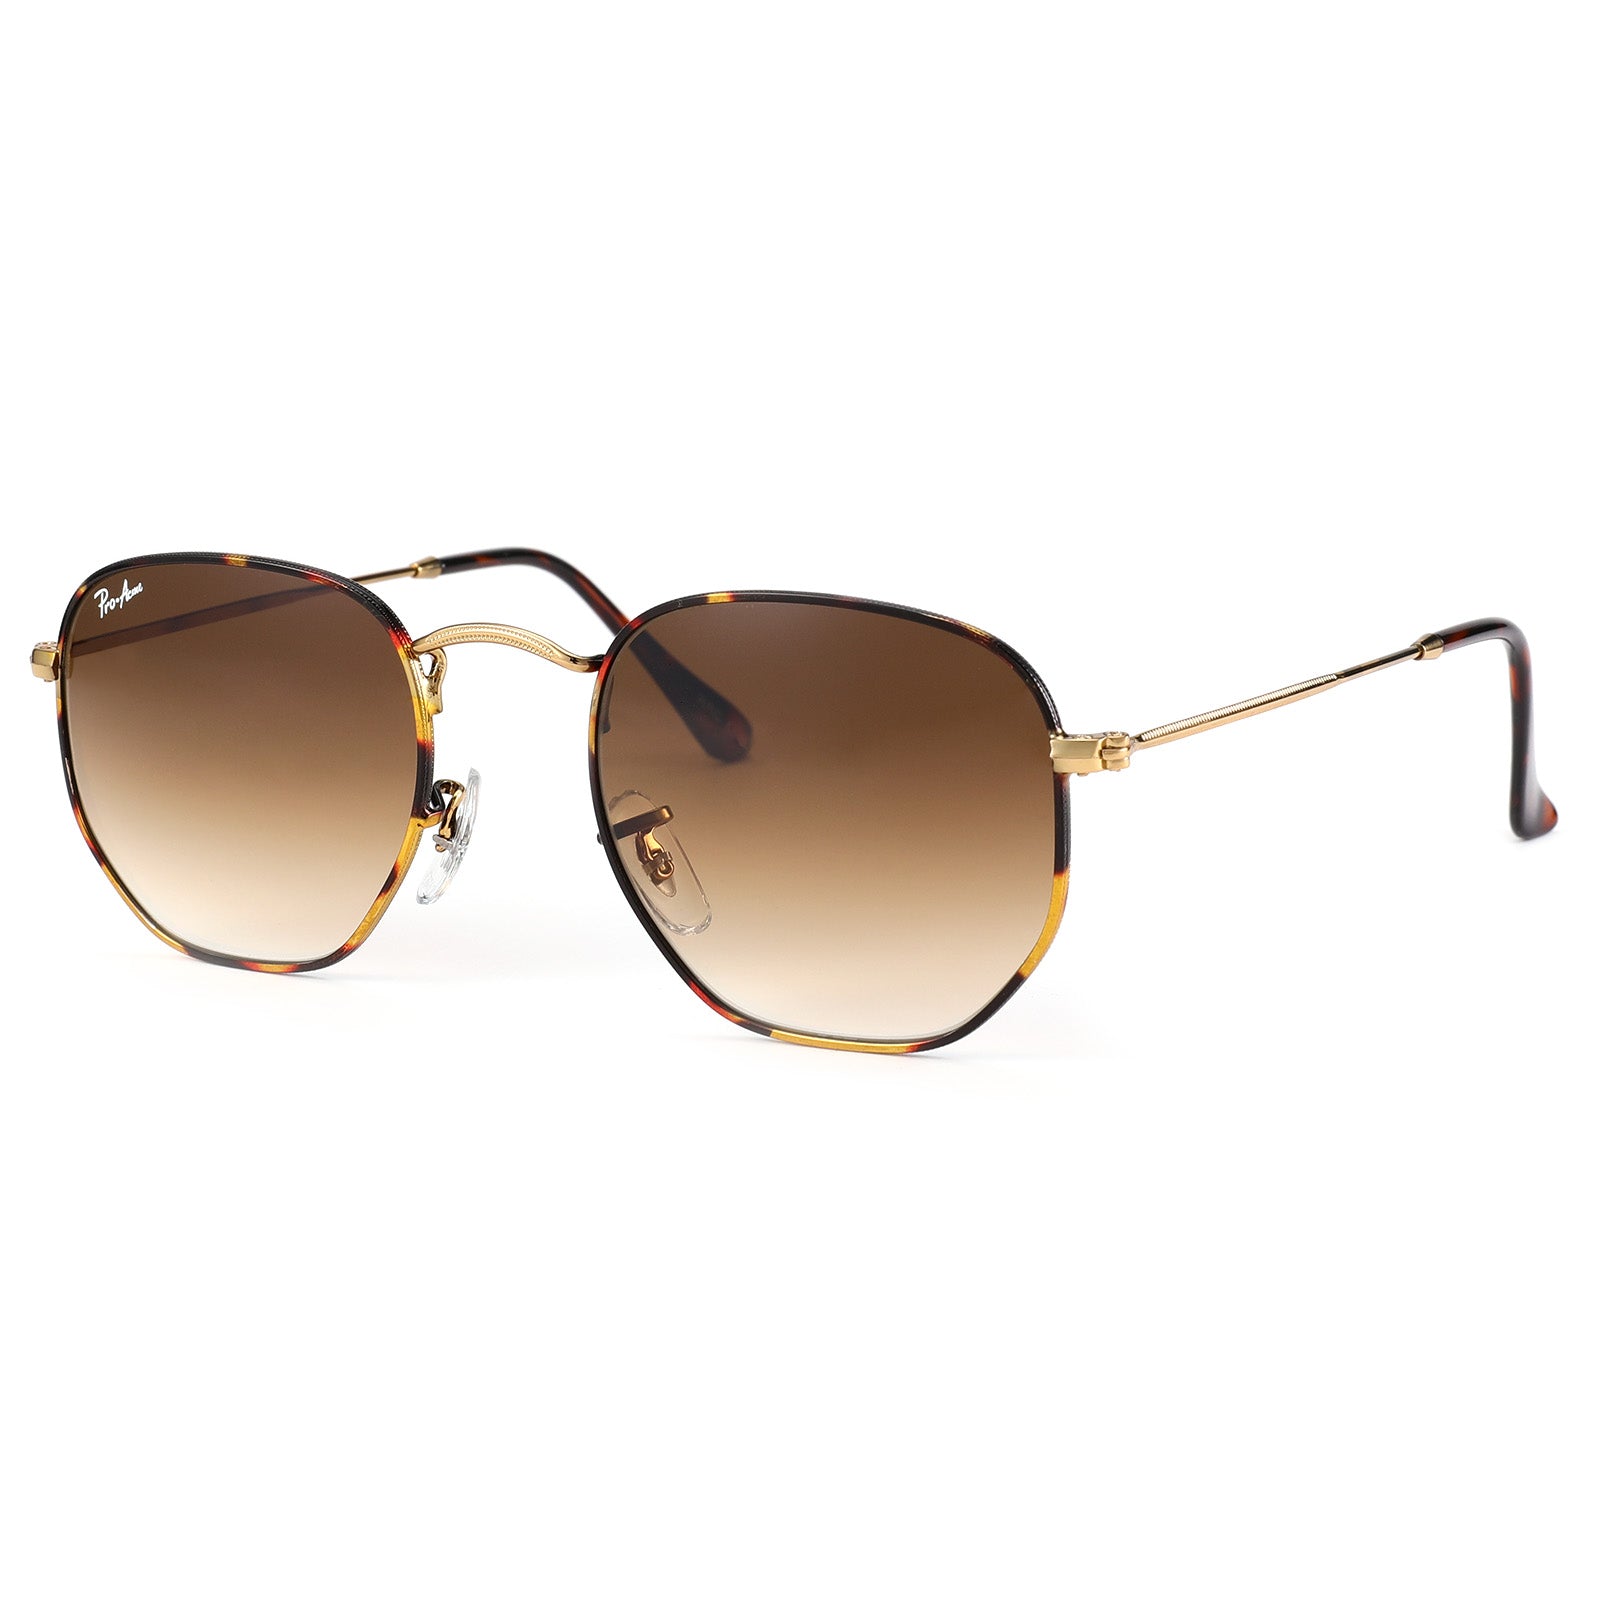  Pro Acme Small Round Polarized Sunglasses for Men